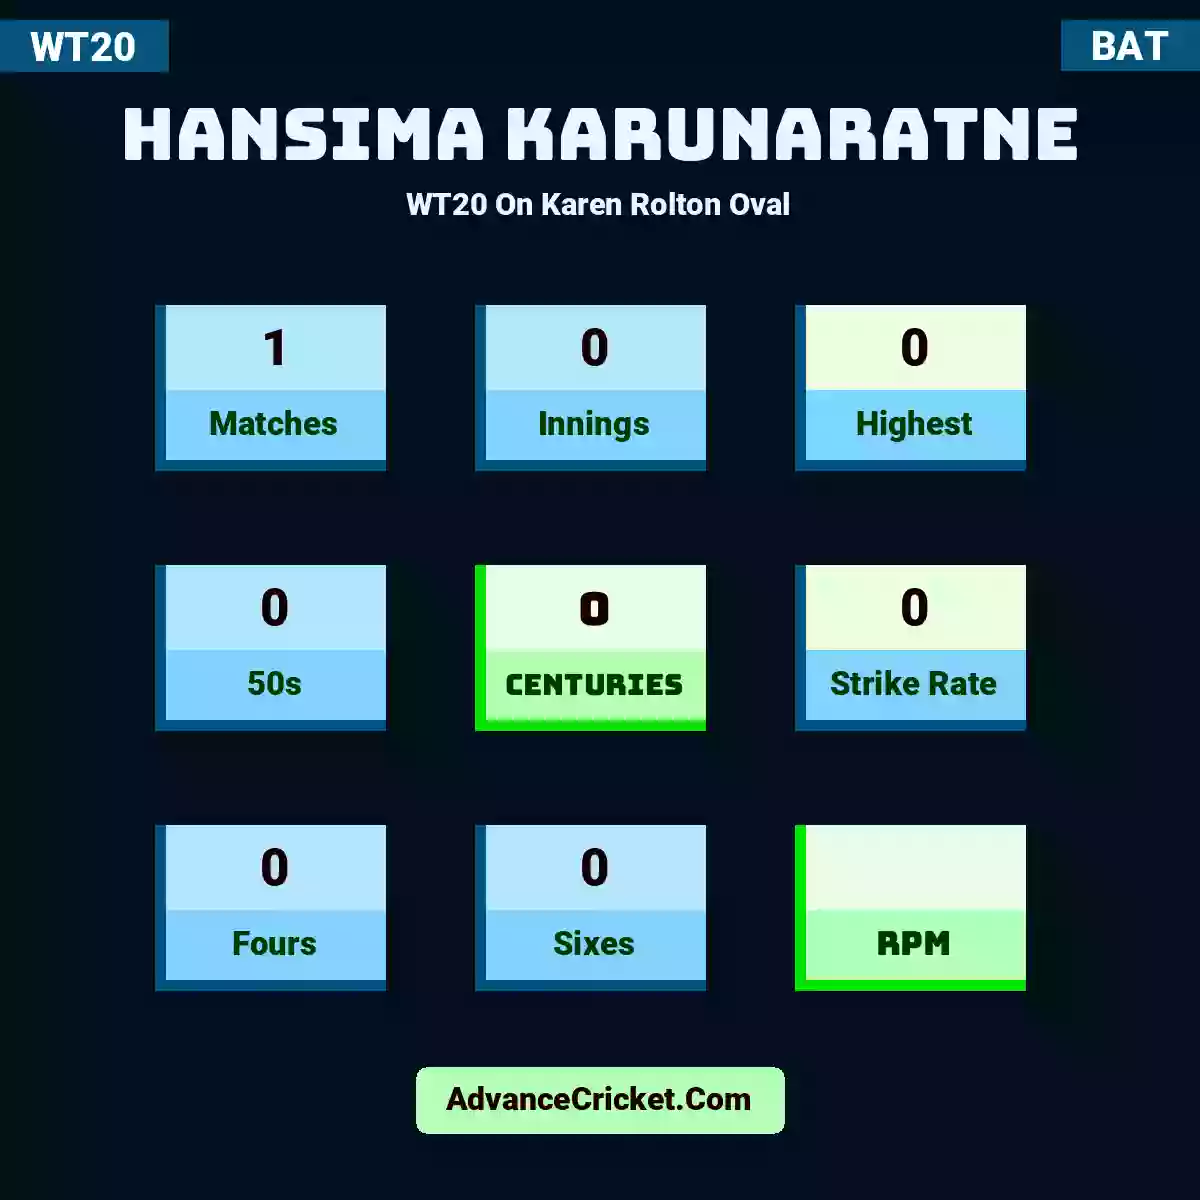 Hansima Karunaratne WT20  On Karen Rolton Oval, Hansima Karunaratne played 1 matches, scored 0 runs as highest, 0 half-centuries, and 0 centuries, with a strike rate of 0. H.Karunaratne hit 0 fours and 0 sixes.